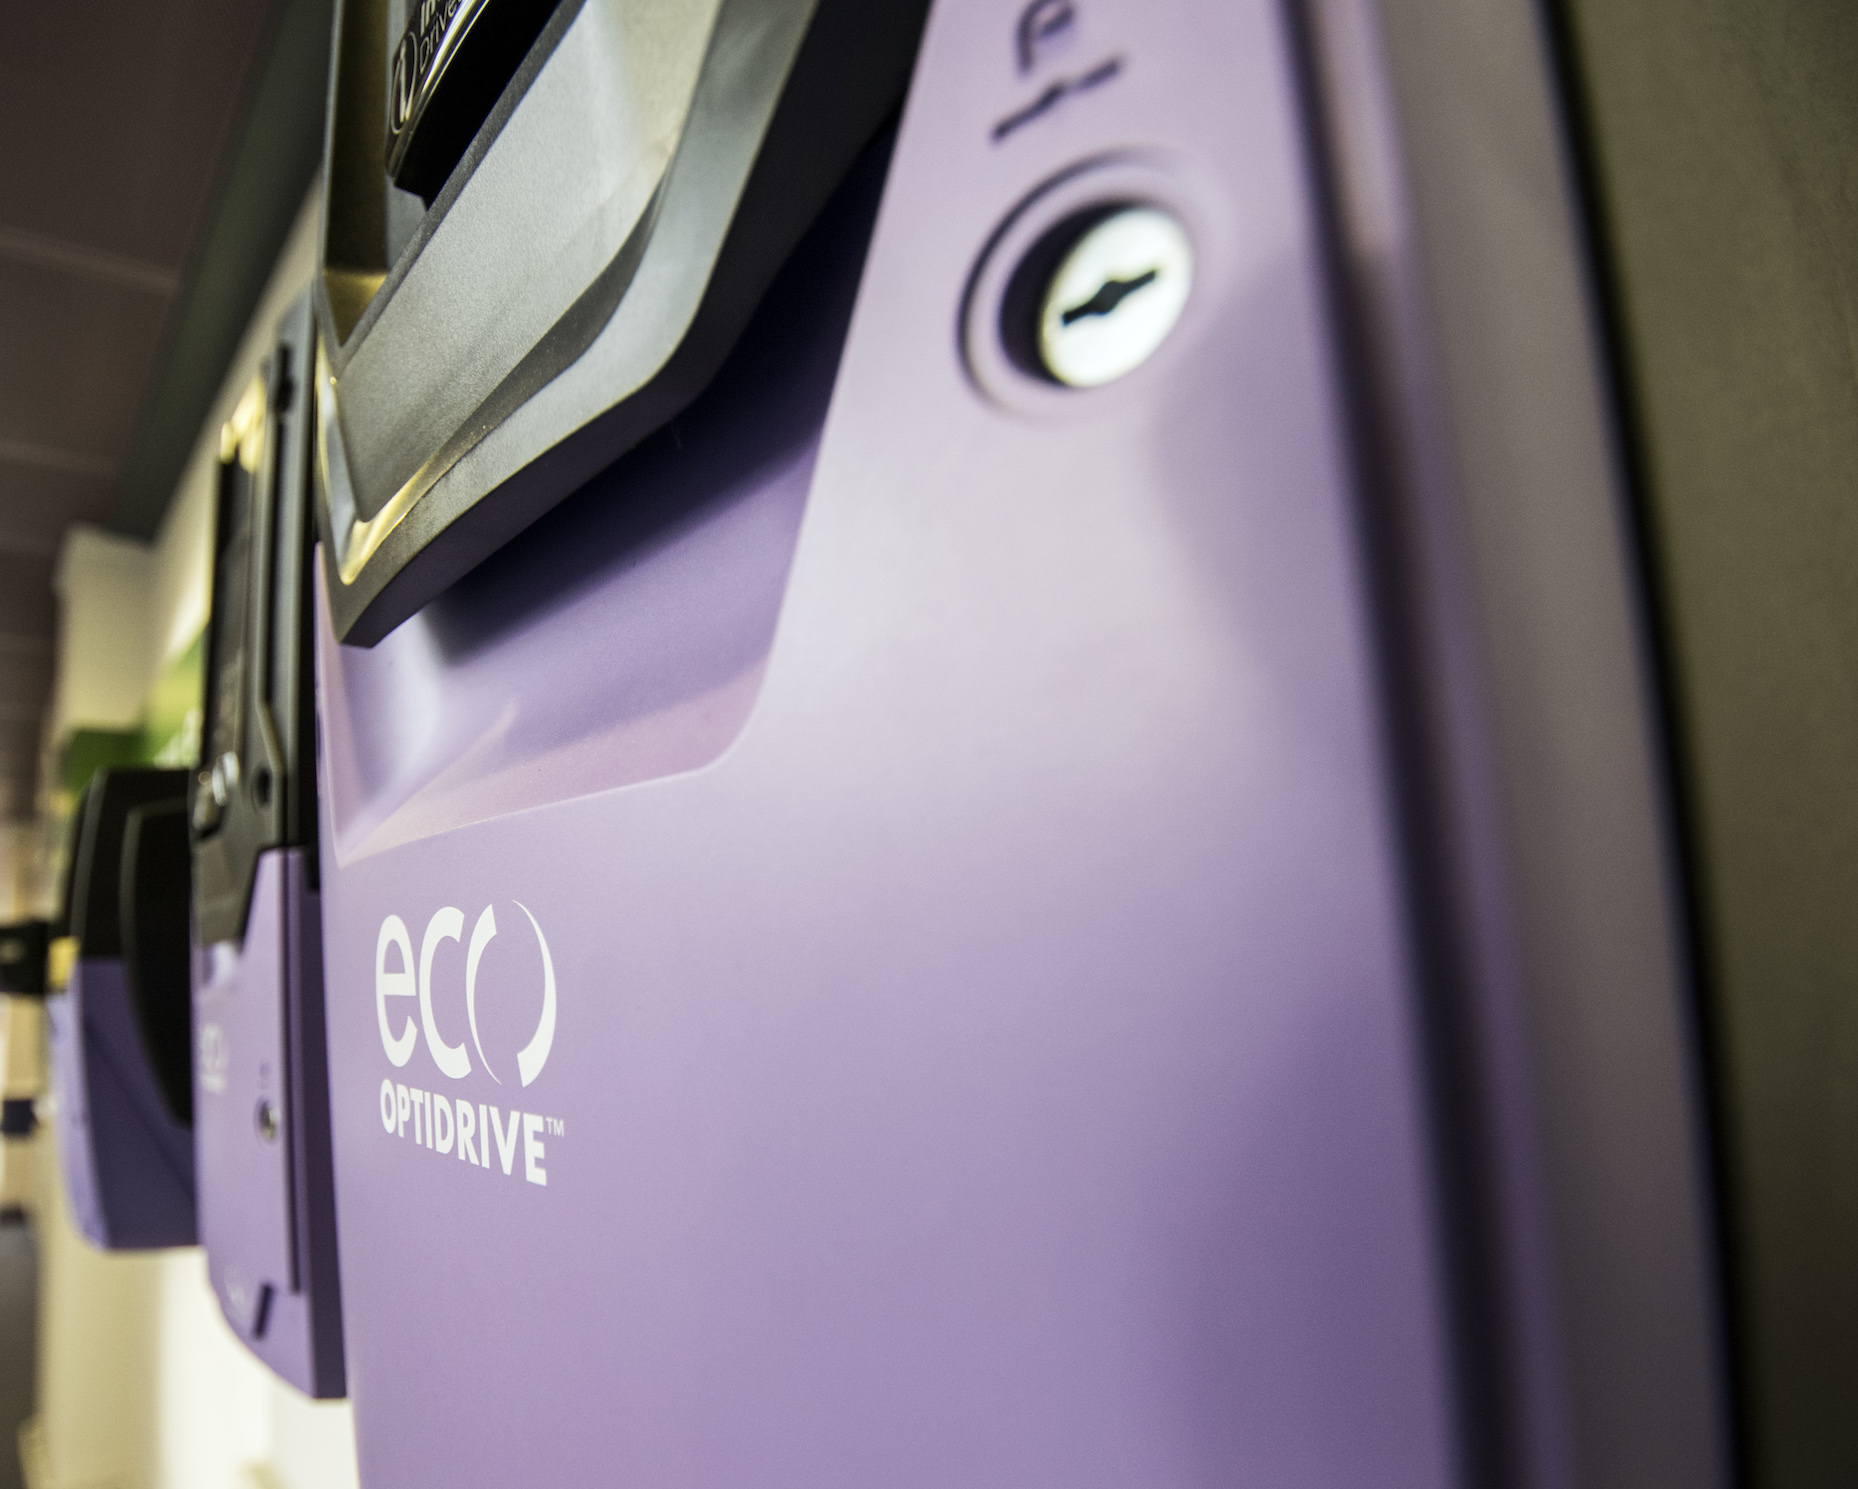 Optidrive Eco boosts leading pump distributor